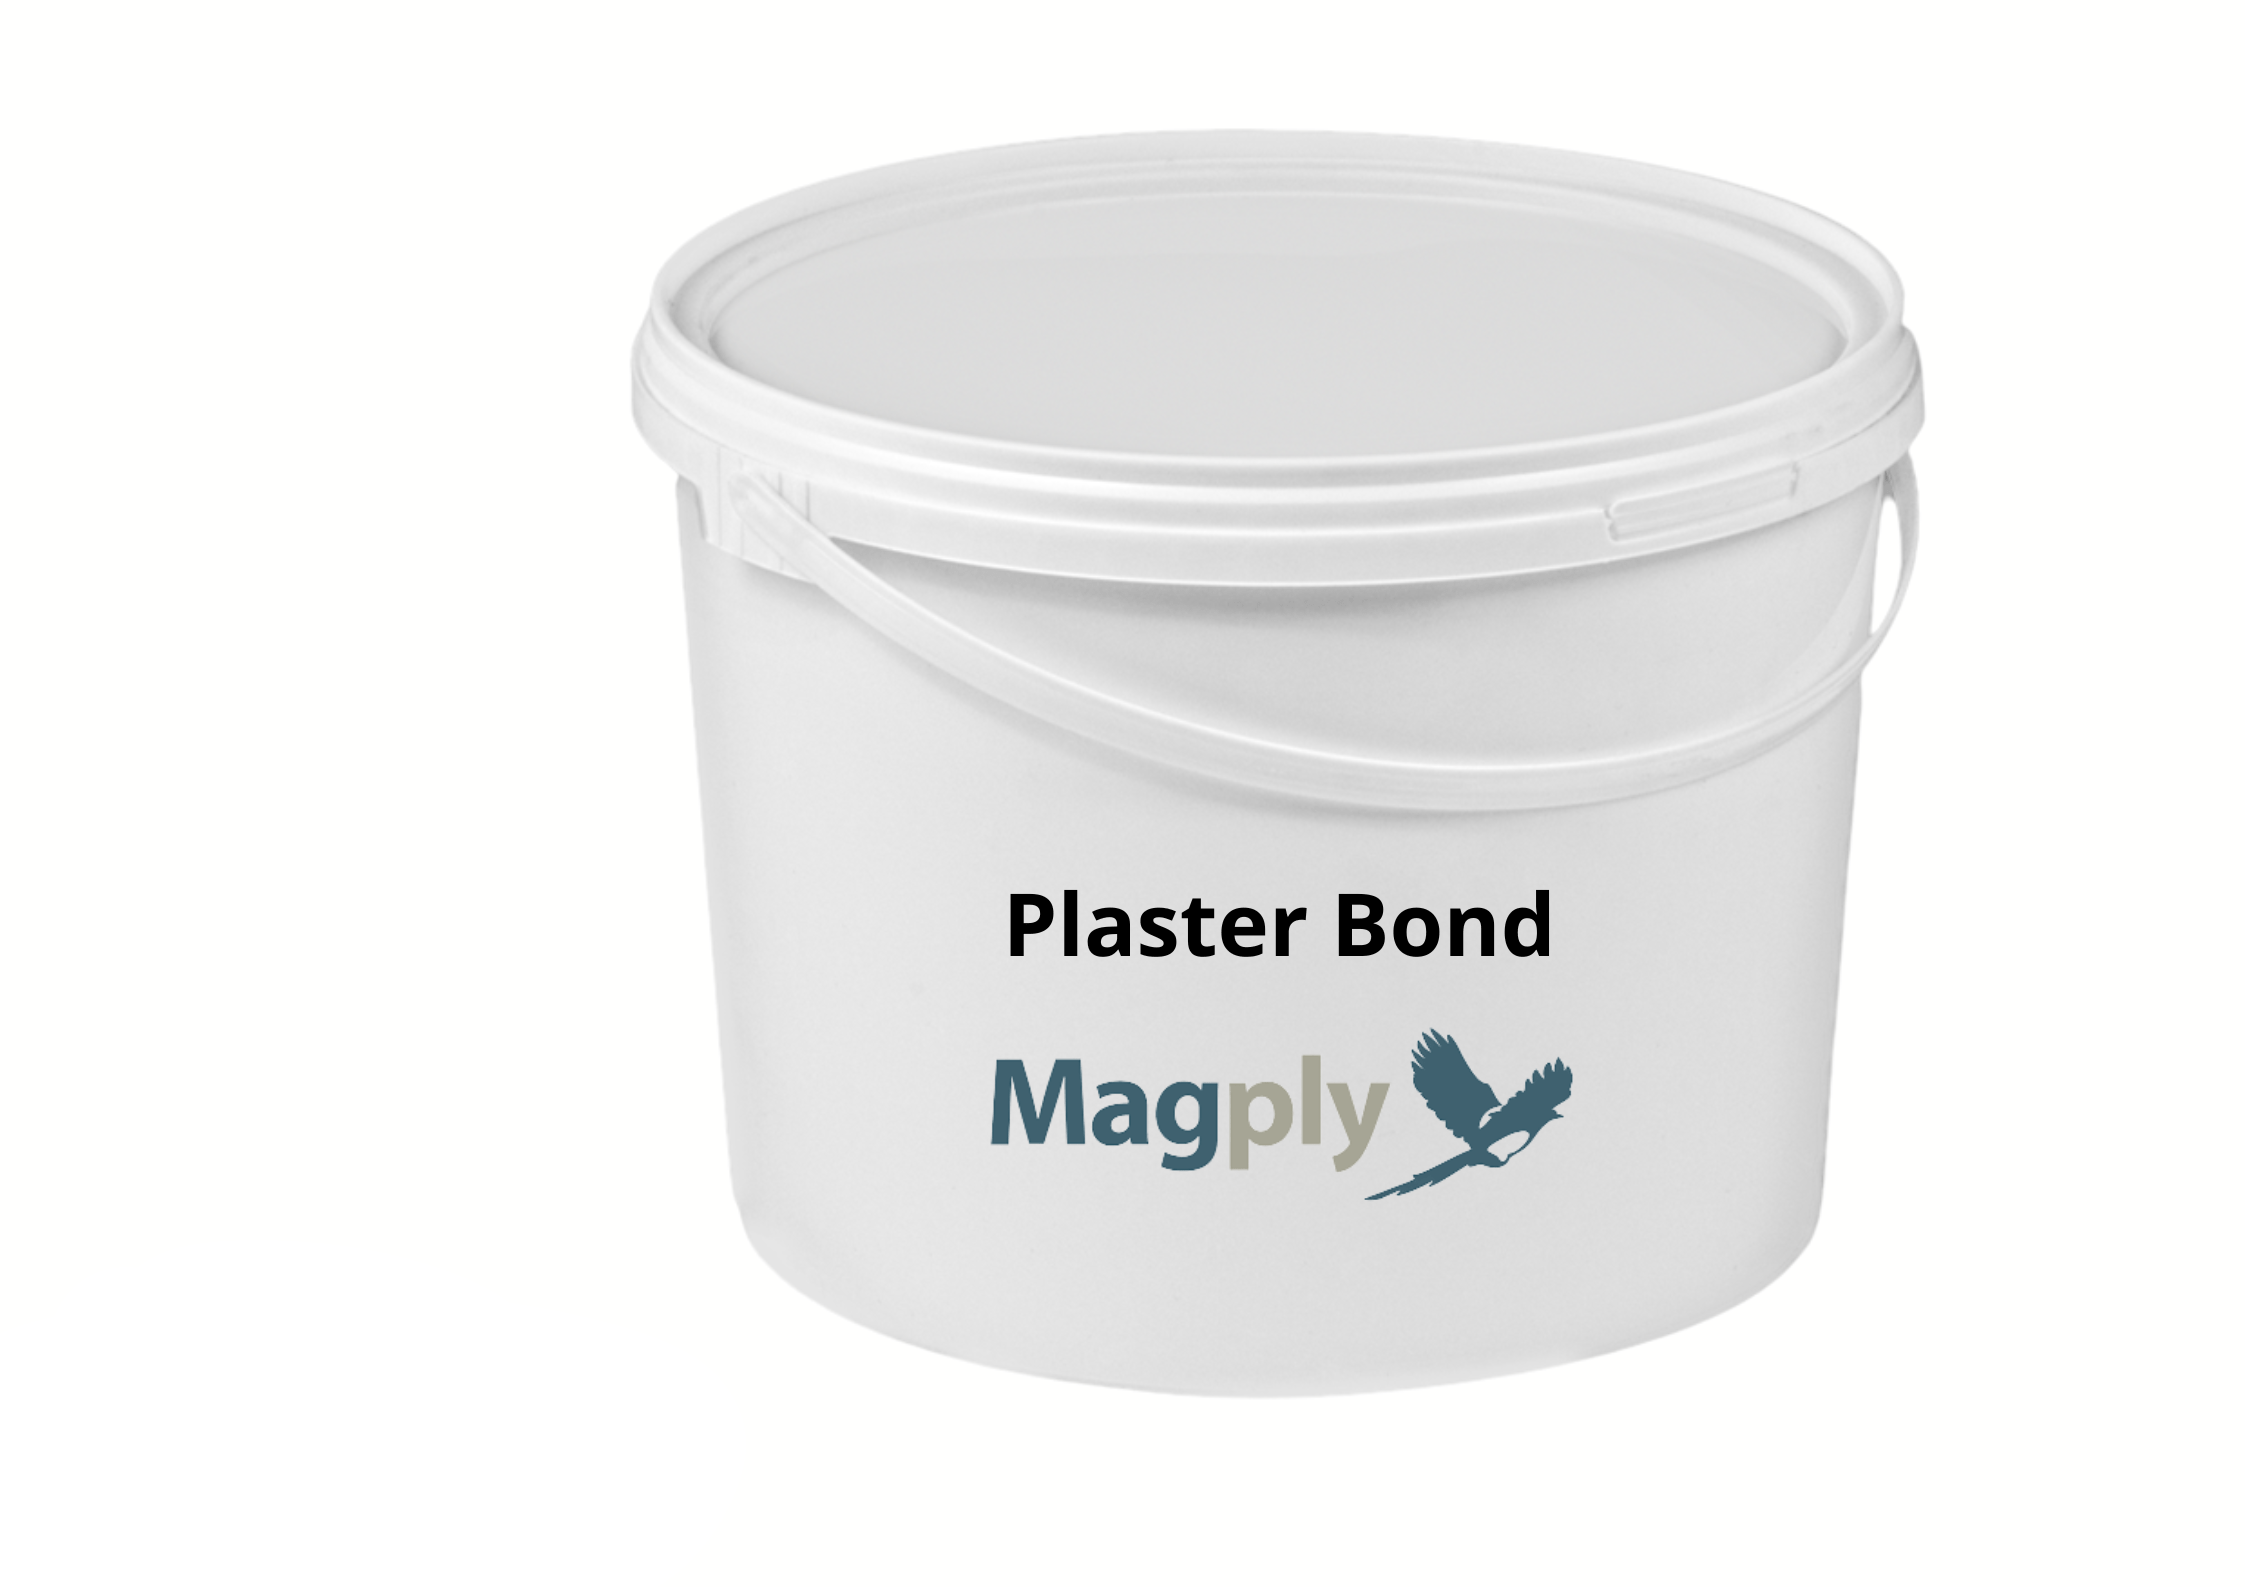 Magply Magply Plaster Bond Magply Ready Mixed Filler Adhesive | insulationuk.co.uk